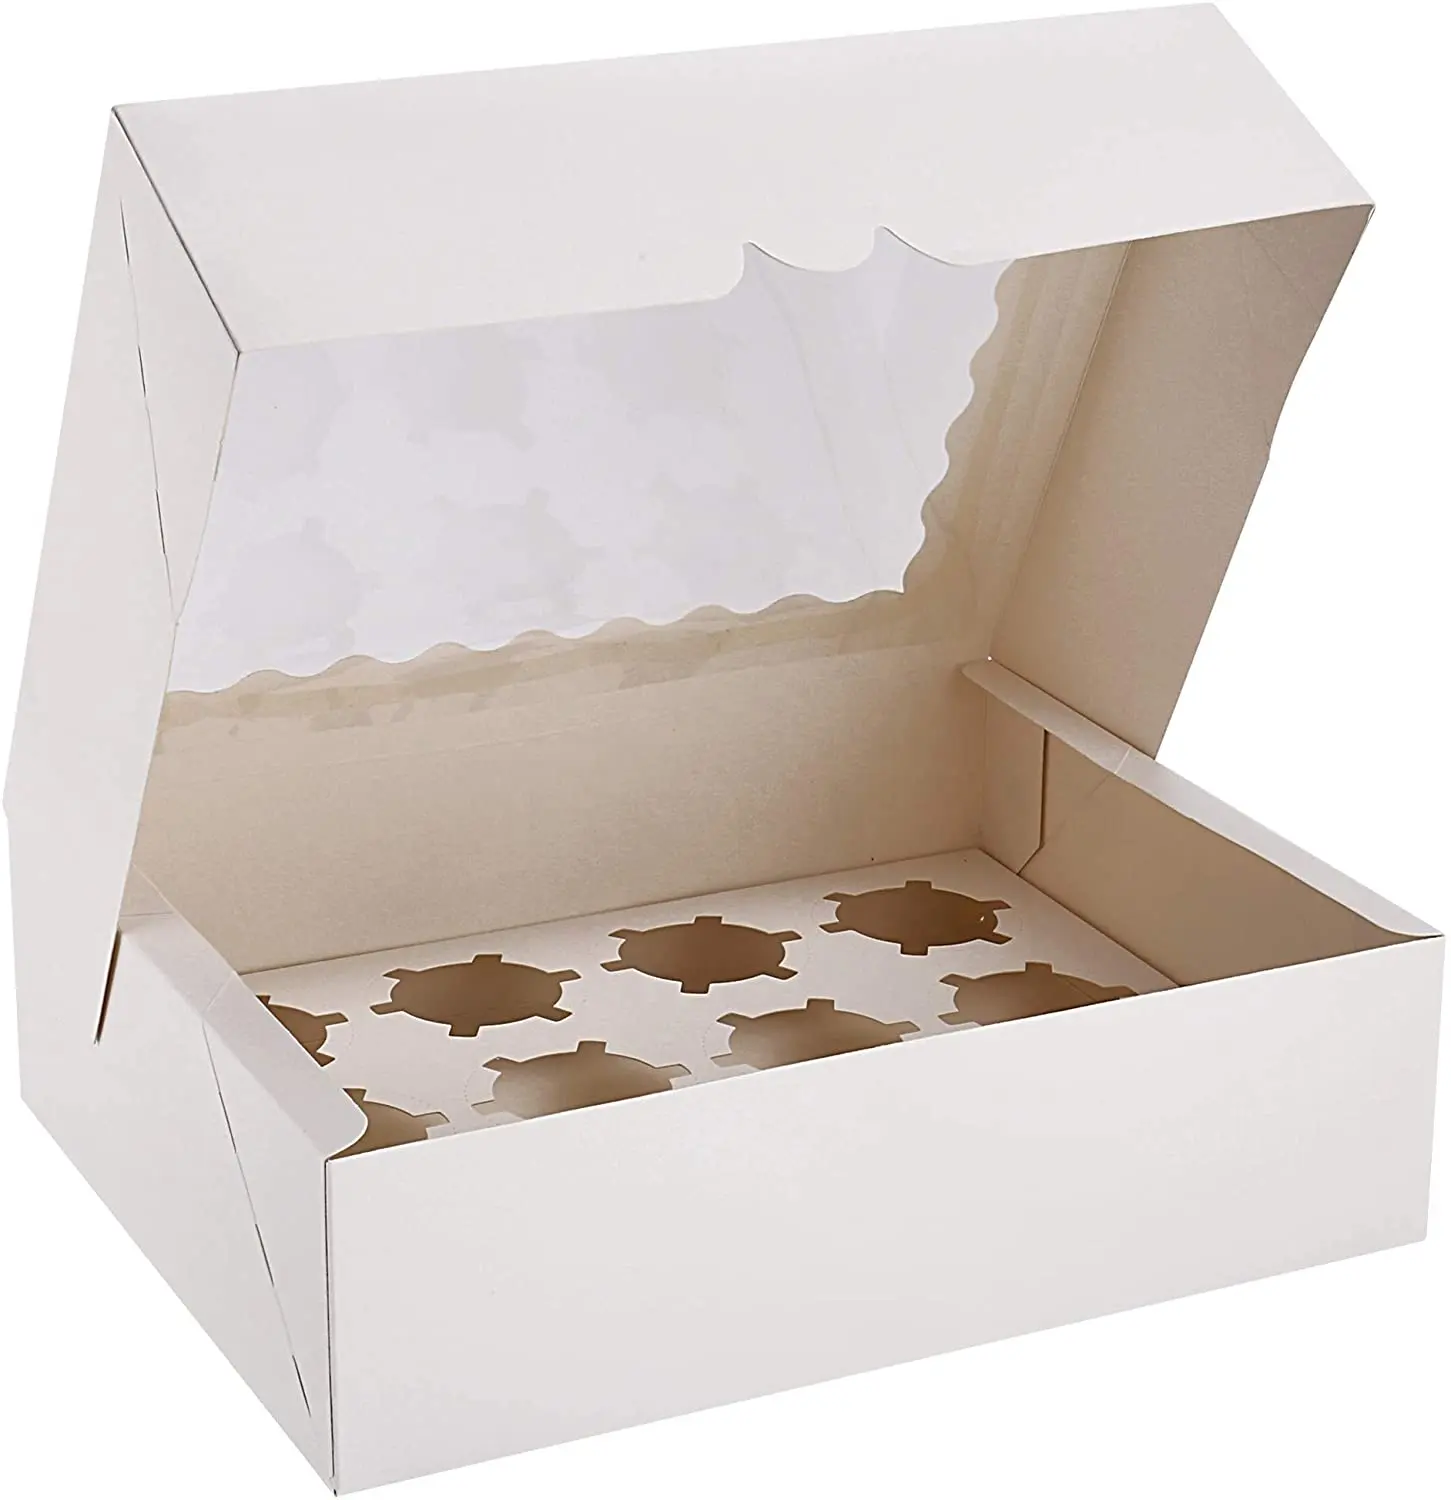 Fabrika toptan özel donut kek paketleme kutusu götürmek Cupcake kutusu ekmek kek ambalaj kutusu ile pencere